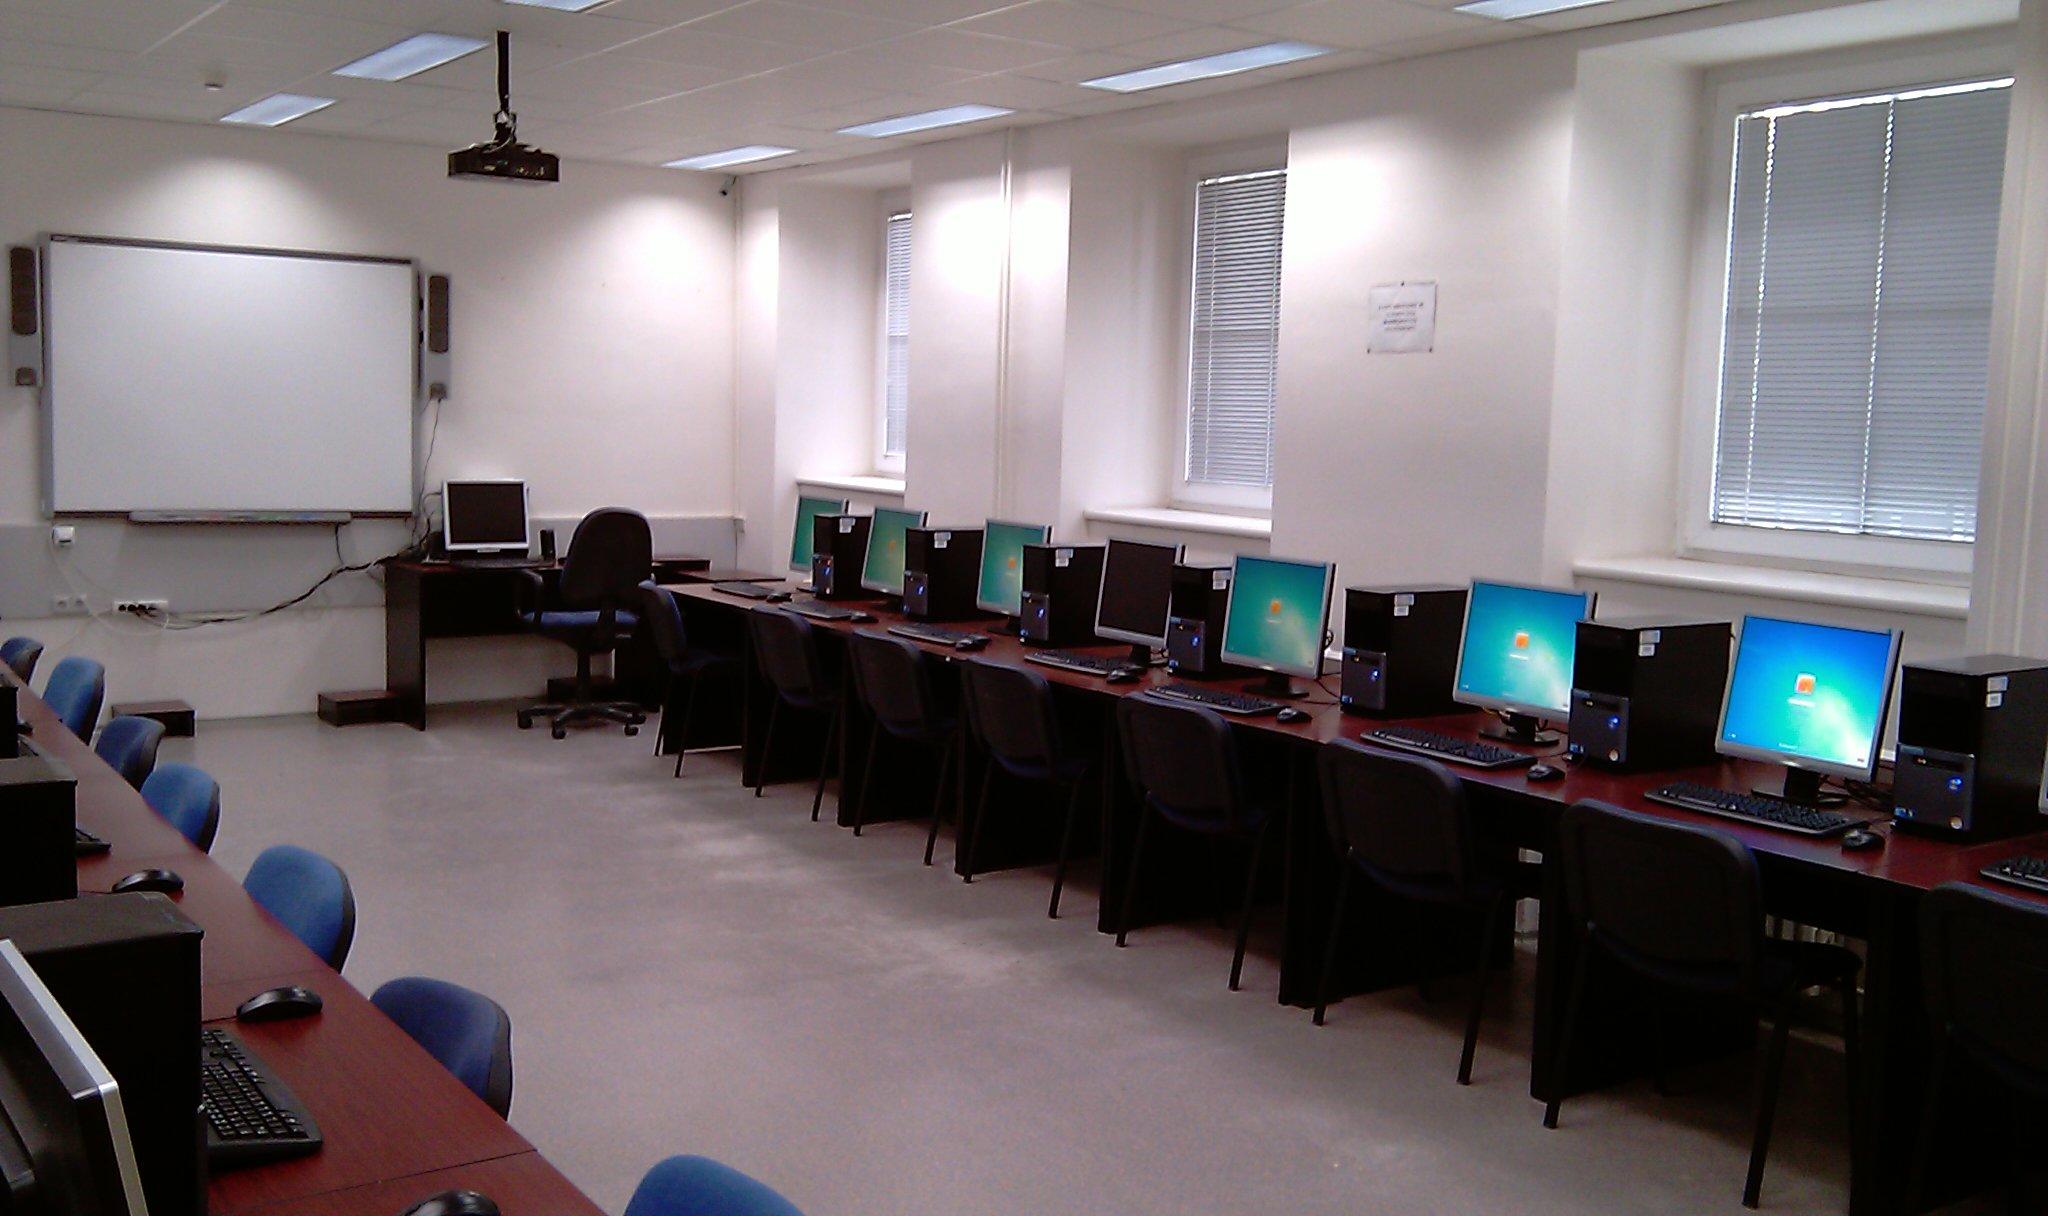 Specialized ICT classroom at Faculty of Education, Palacký University Olomouc, Czechia